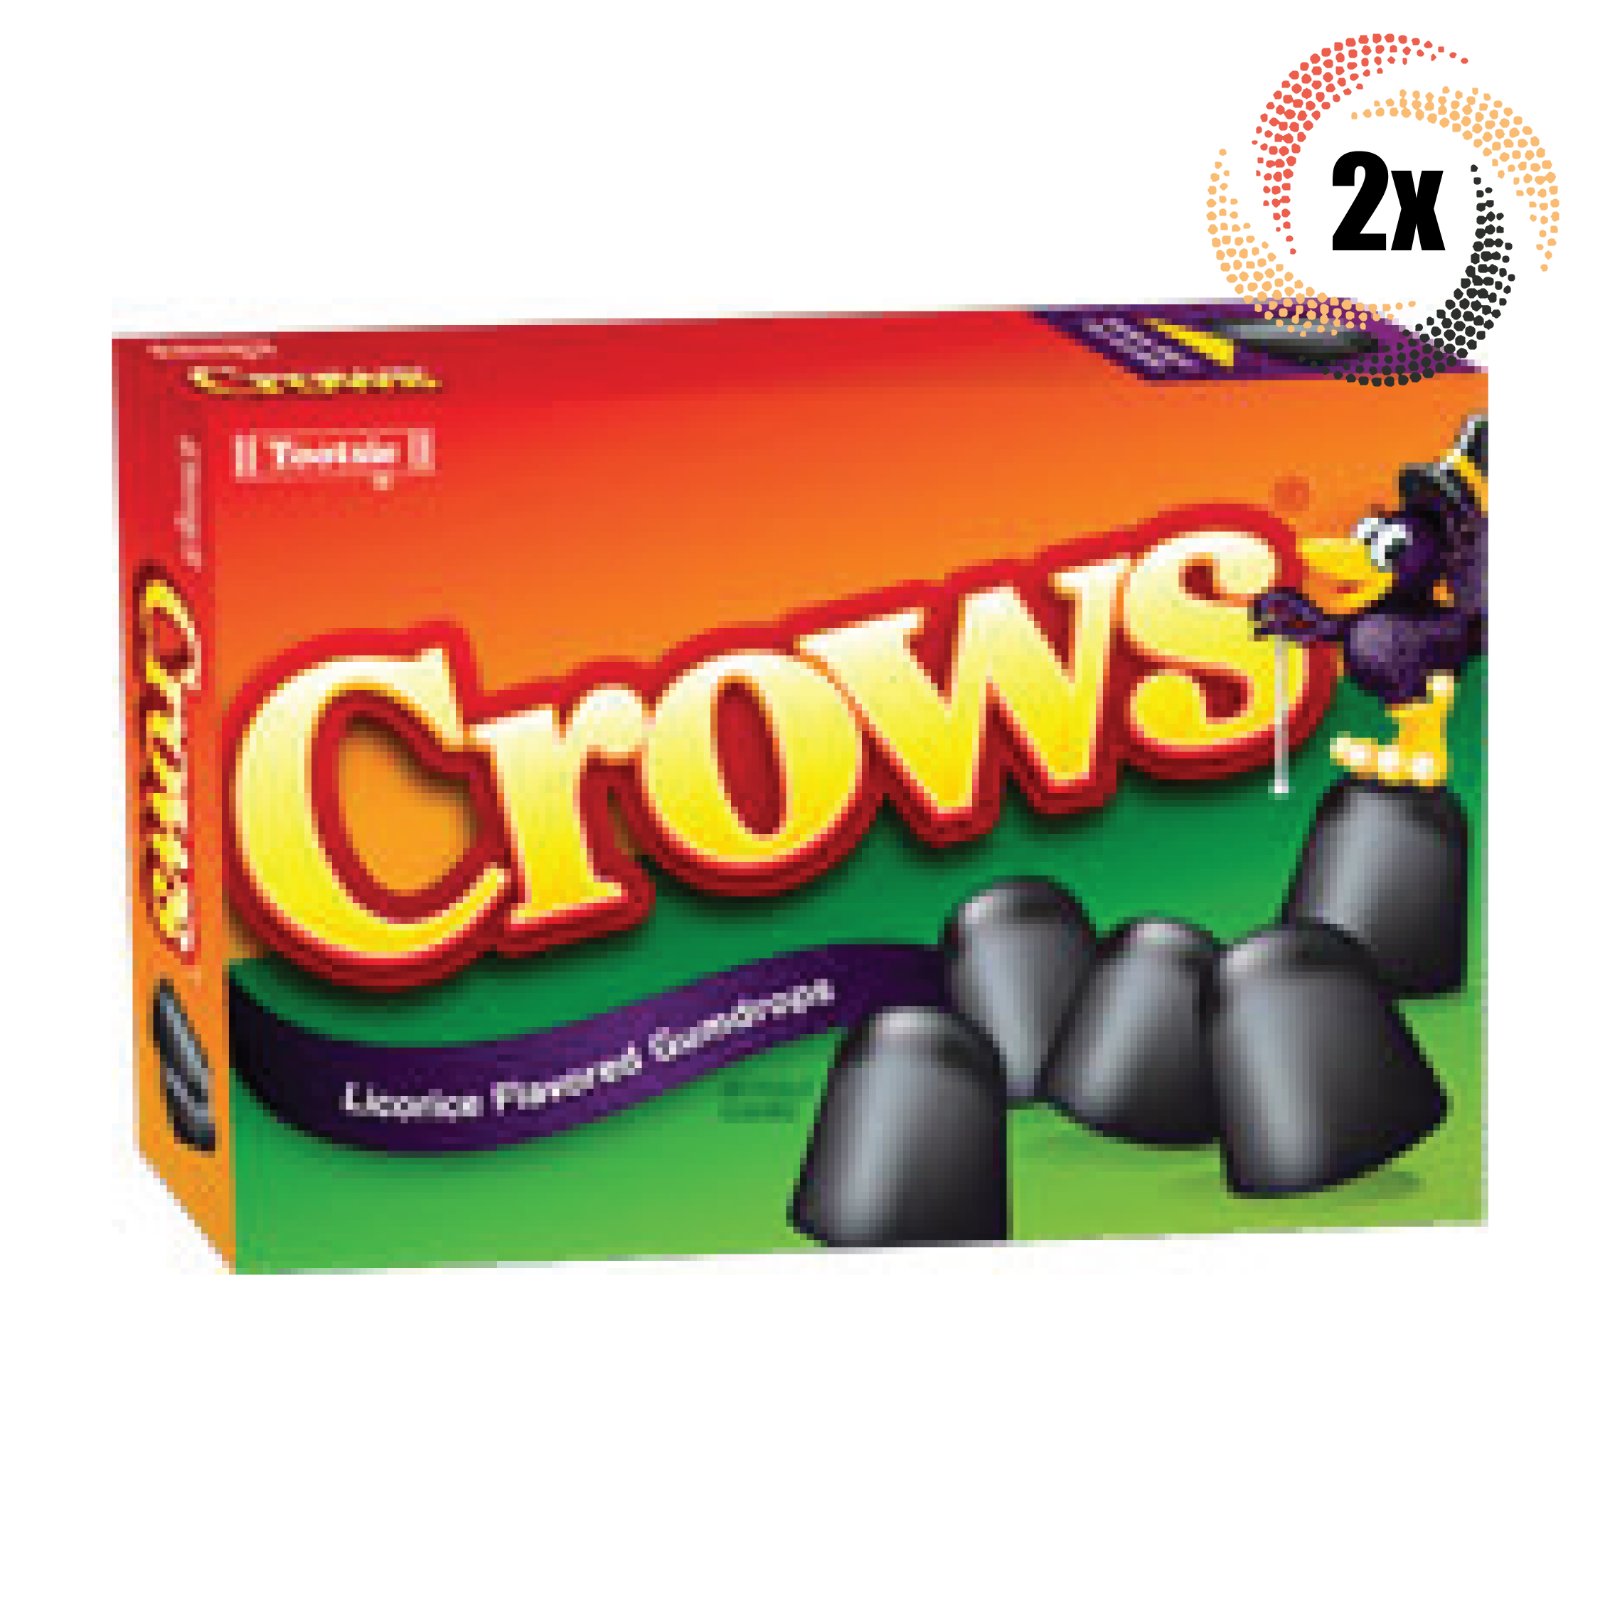 2x Packs Tootsie Crows Licorice Flavored Black Gumdrops Theator Box | 6.5oz - $11.78